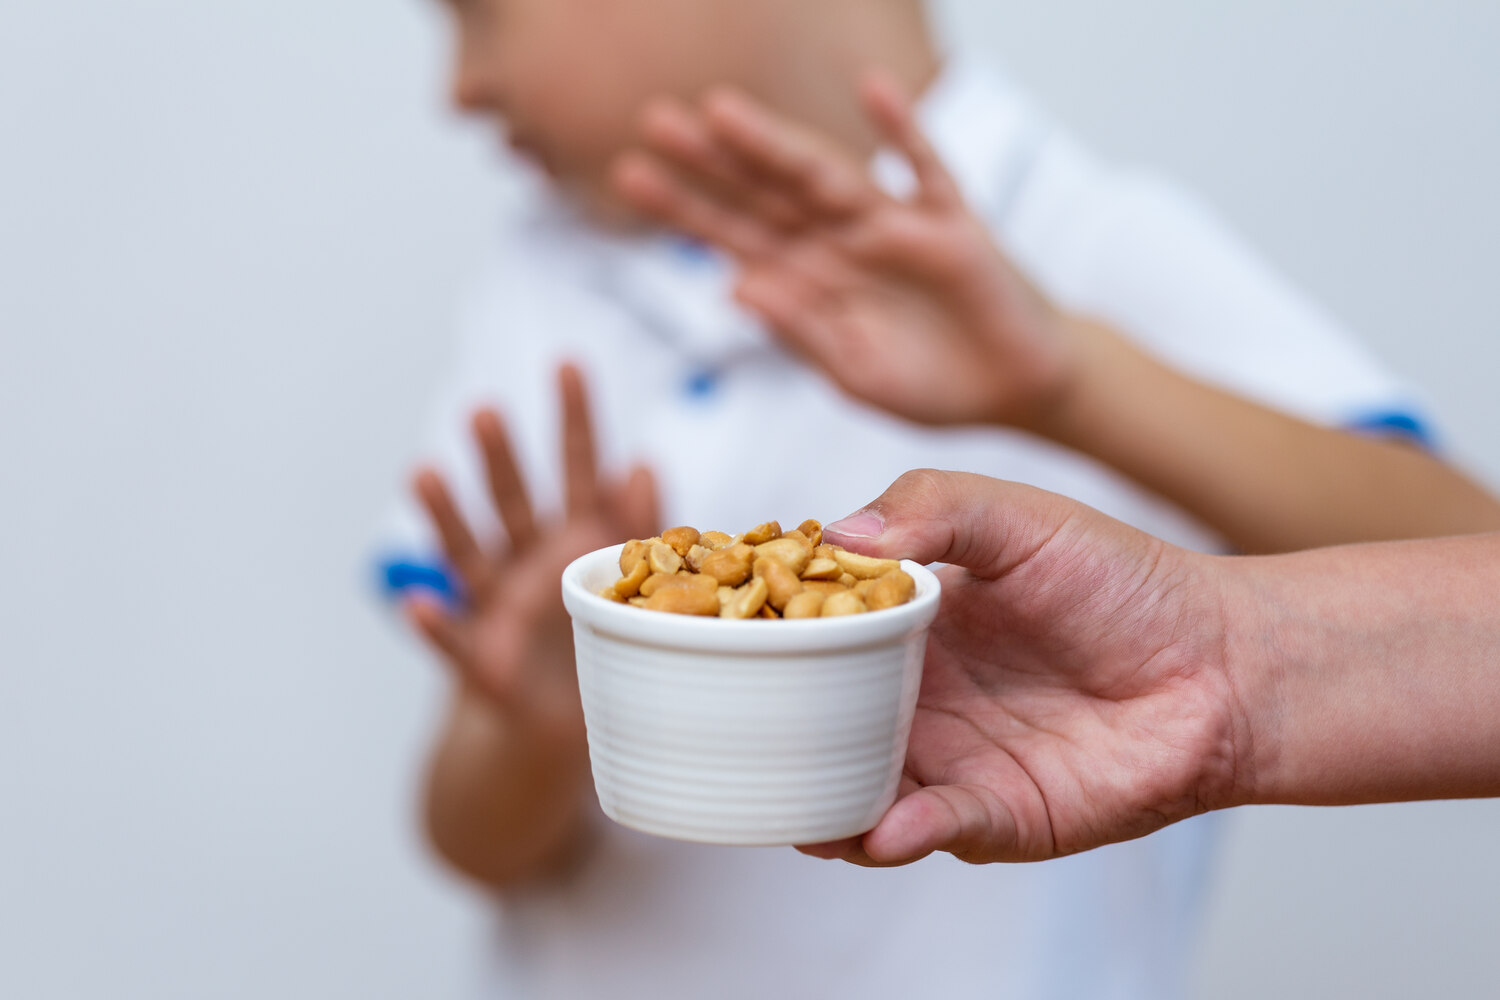 Nut and Peanut allergy in children